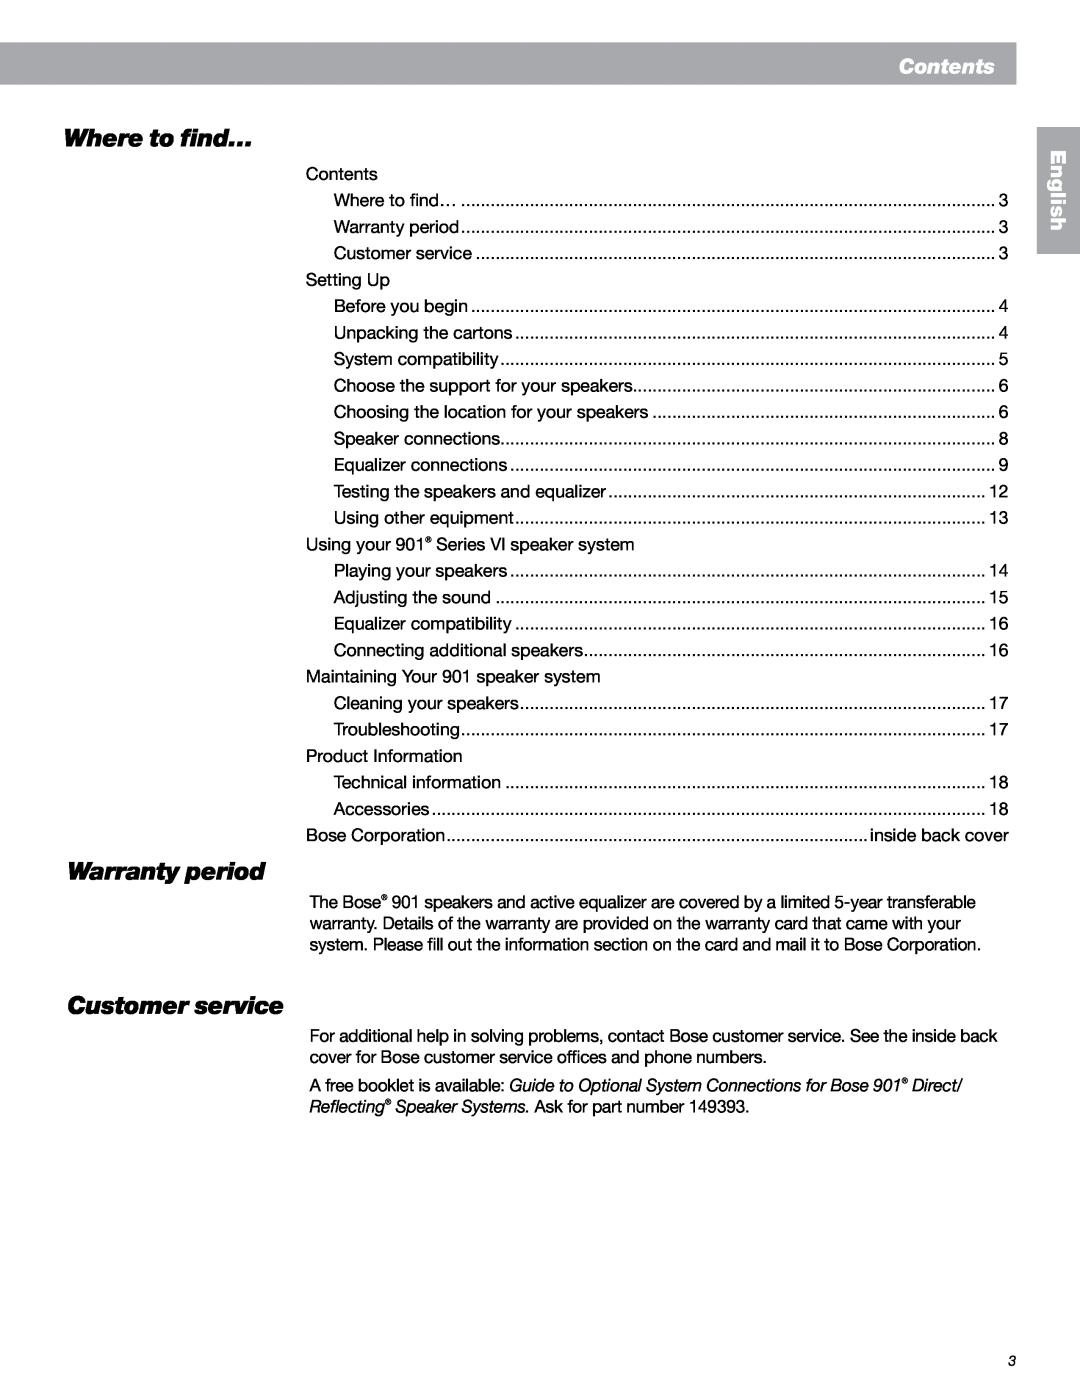 Bose 901 Series VI, 149393 manual Where to find…, Warranty period, Customer service, Contents, English 